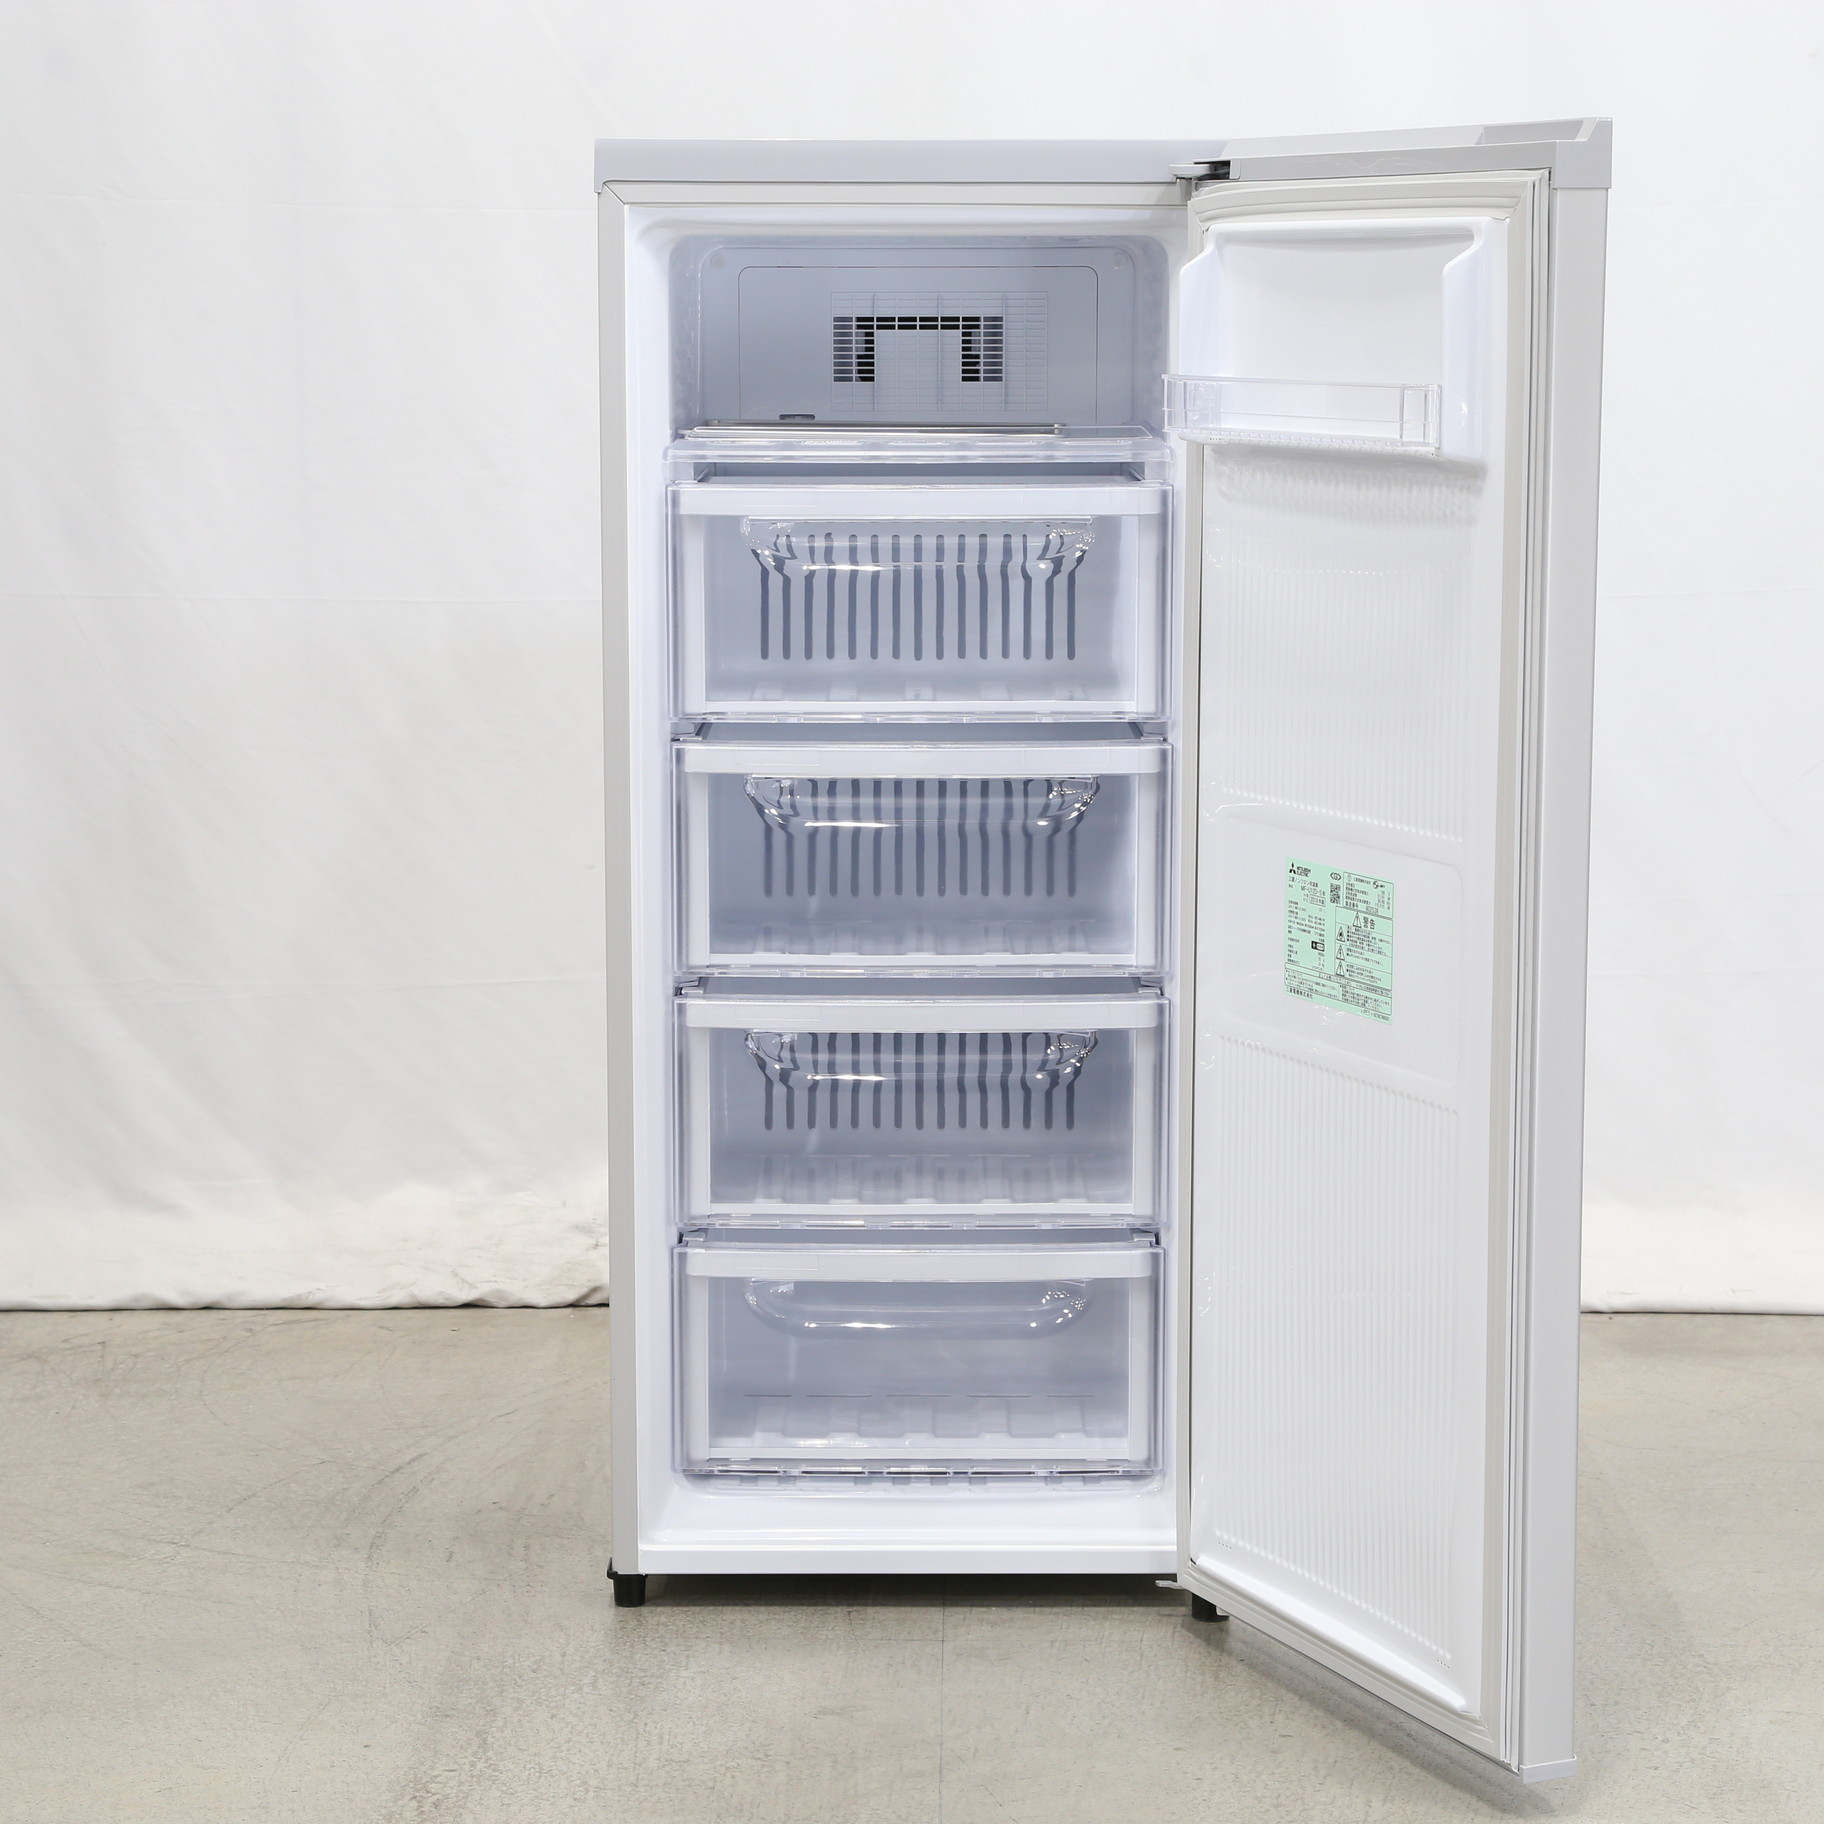 2019年製 MITSUBISHI 三菱電機 冷凍庫 MF-U12D-S - 冷蔵庫